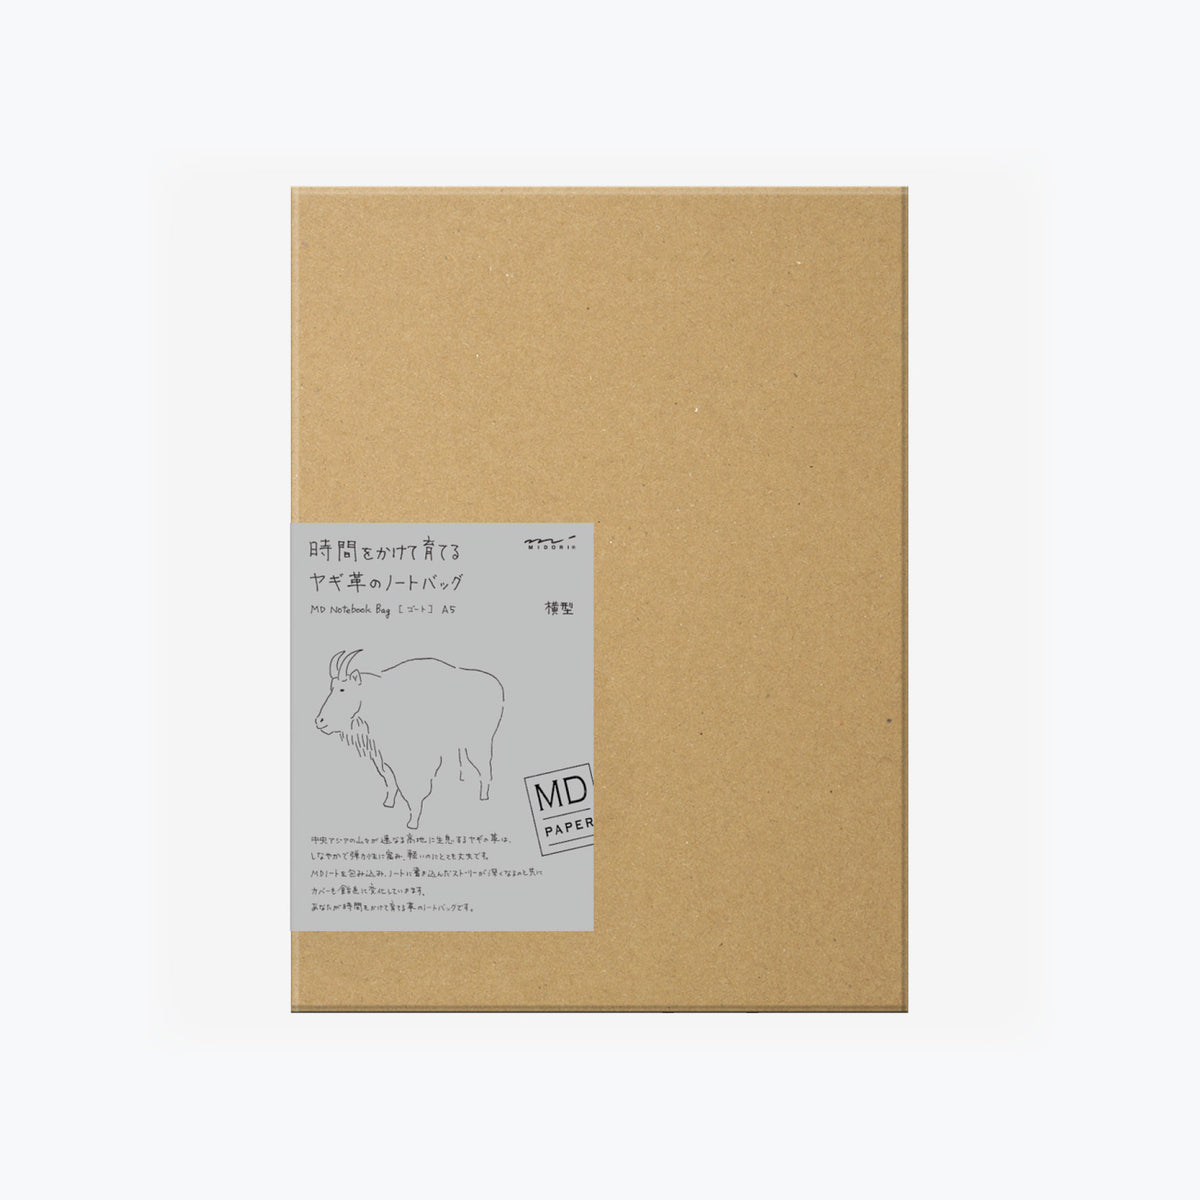 Midori - Pouch - Goat Leather - A5 - Horizontal <Outgoing>